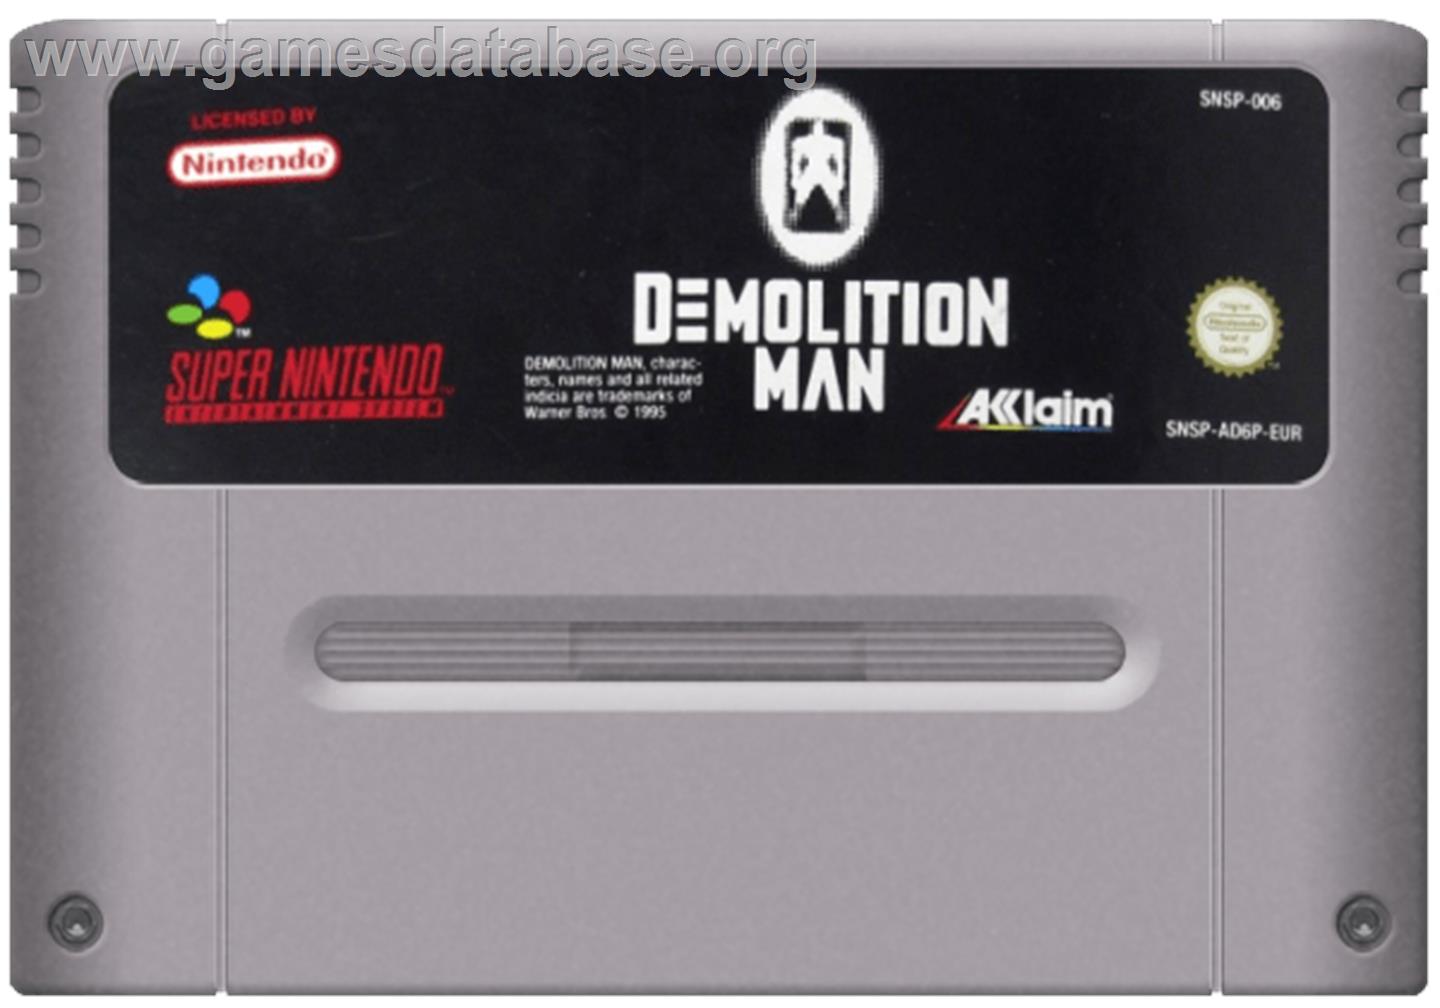 Demolition Man - Nintendo SNES - Artwork - Cartridge